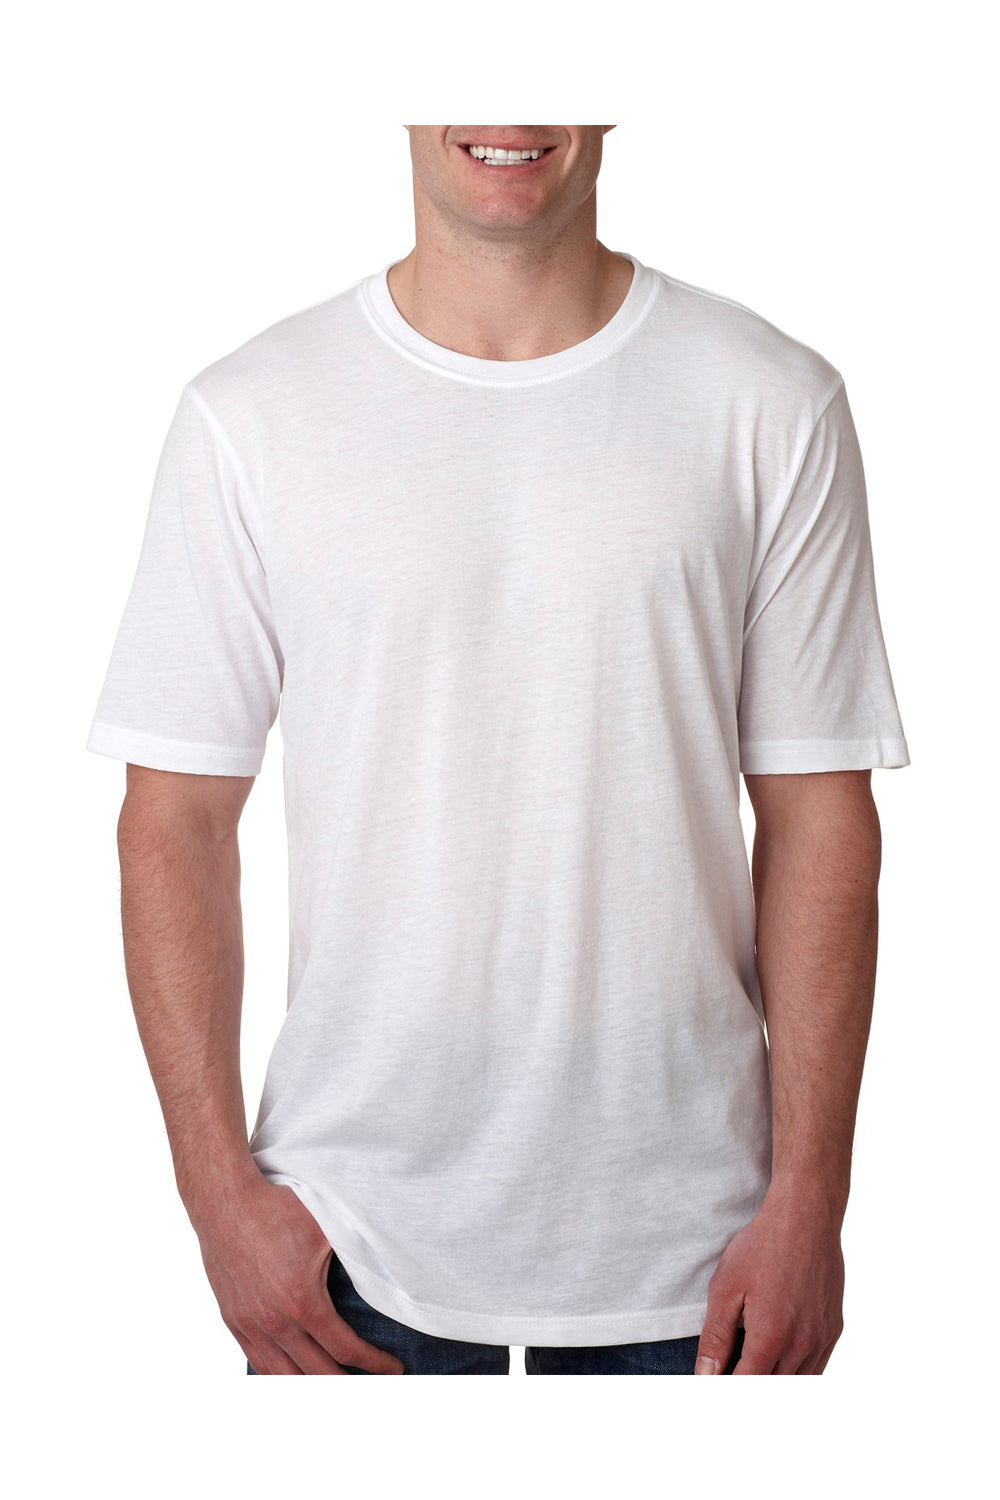 Next Level 6200 Mens Jersey Short Sleeve Crewneck T-Shirt White Front